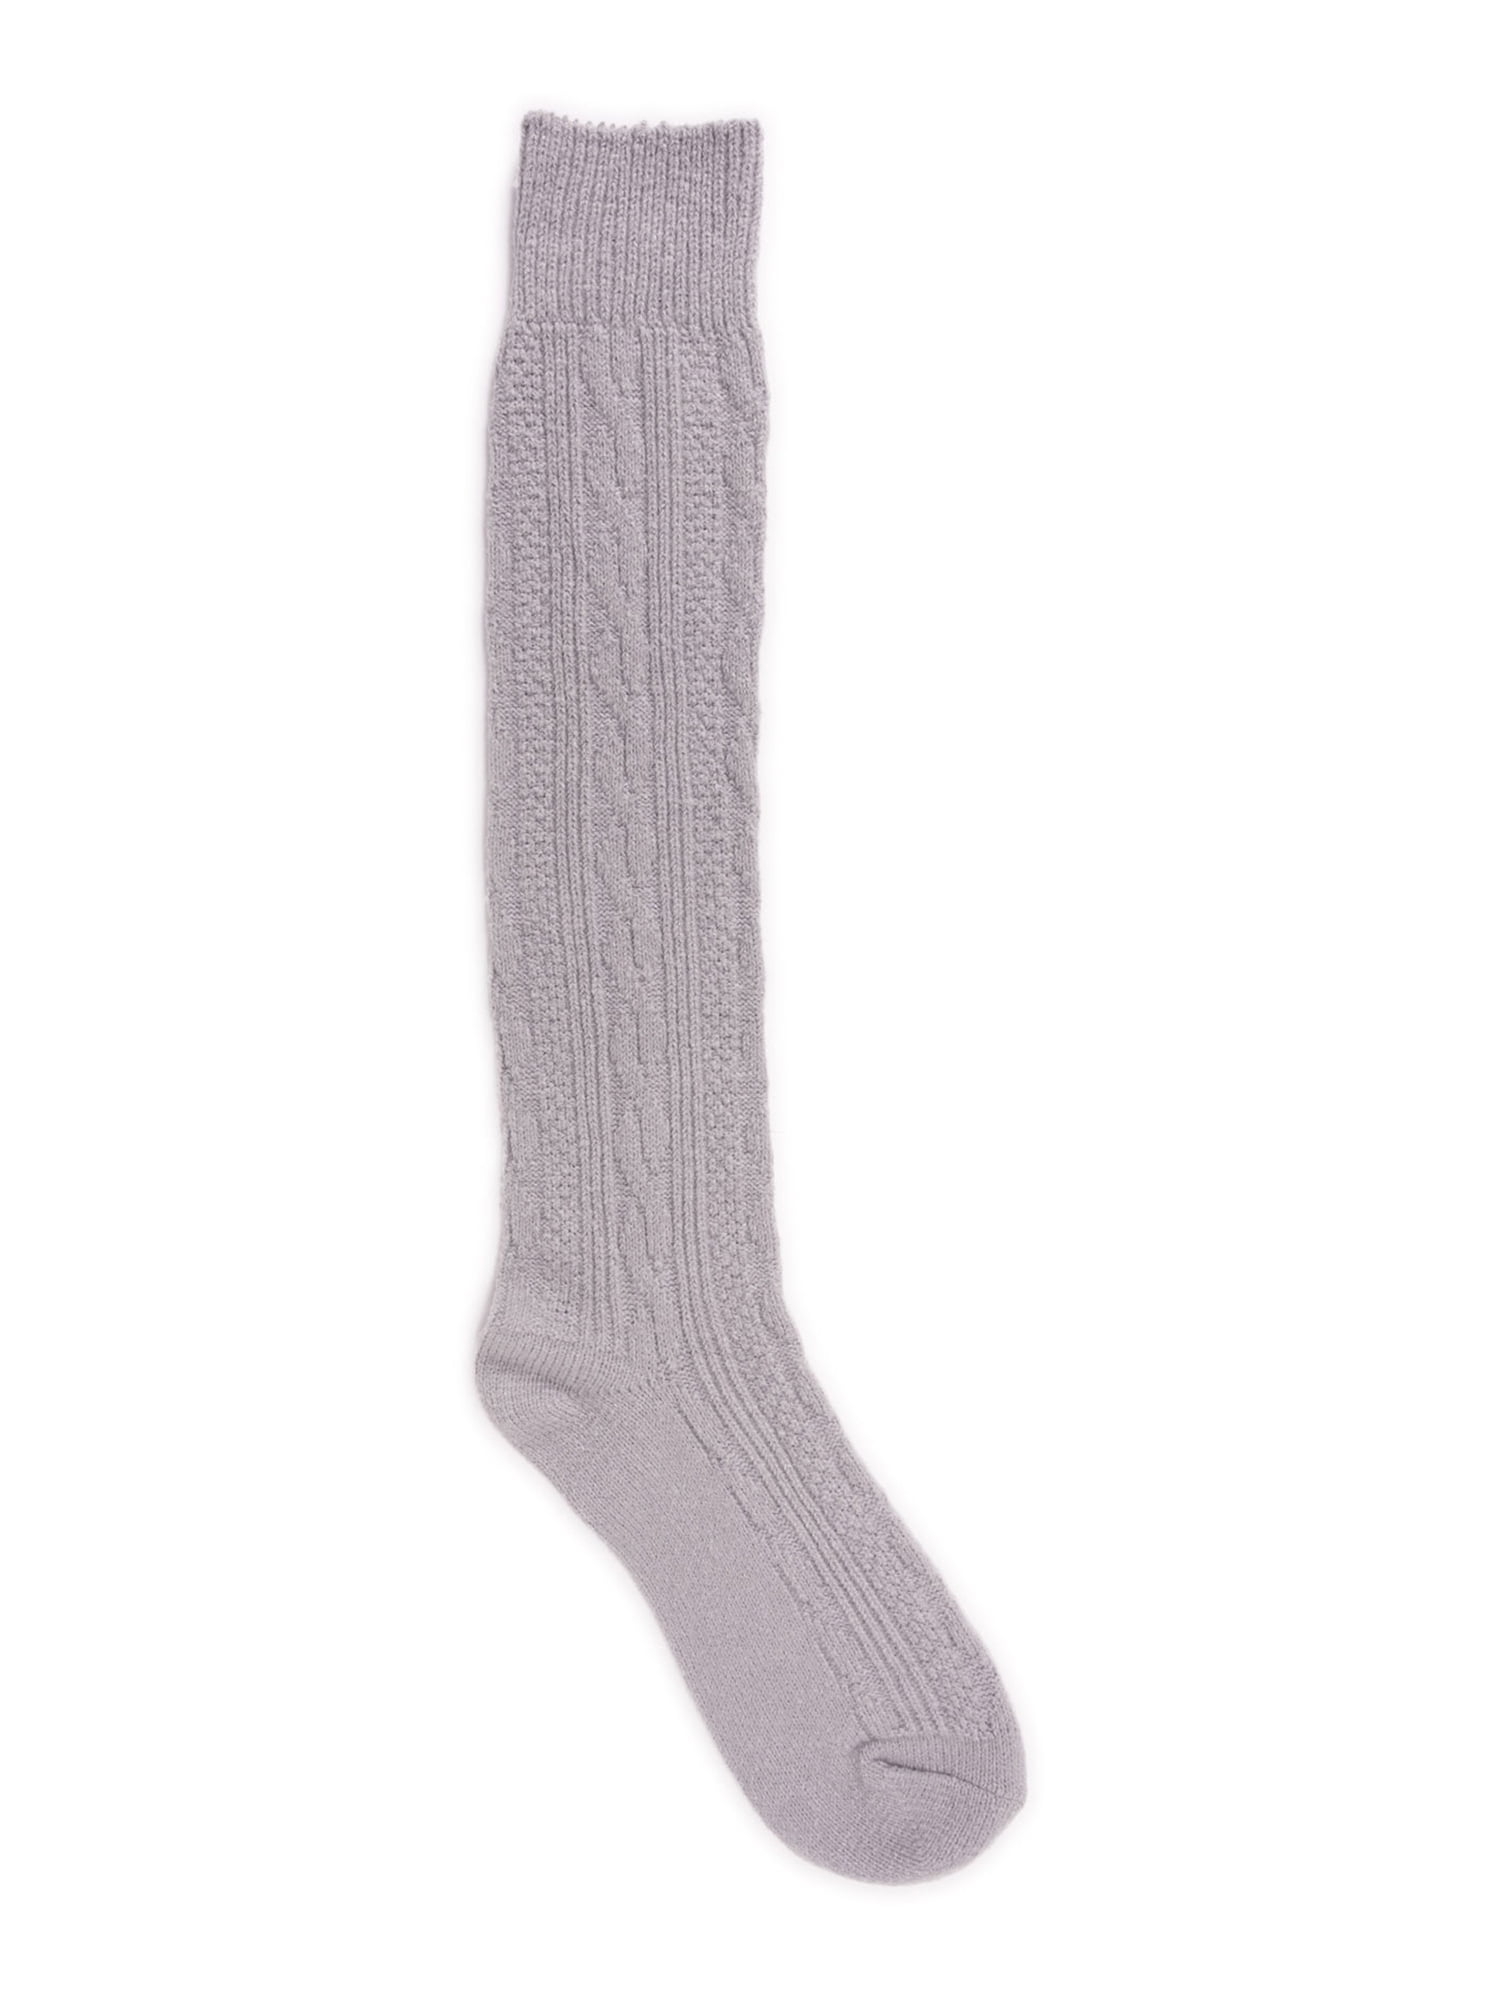 Muk Luks Women's Knee High Cable Sock